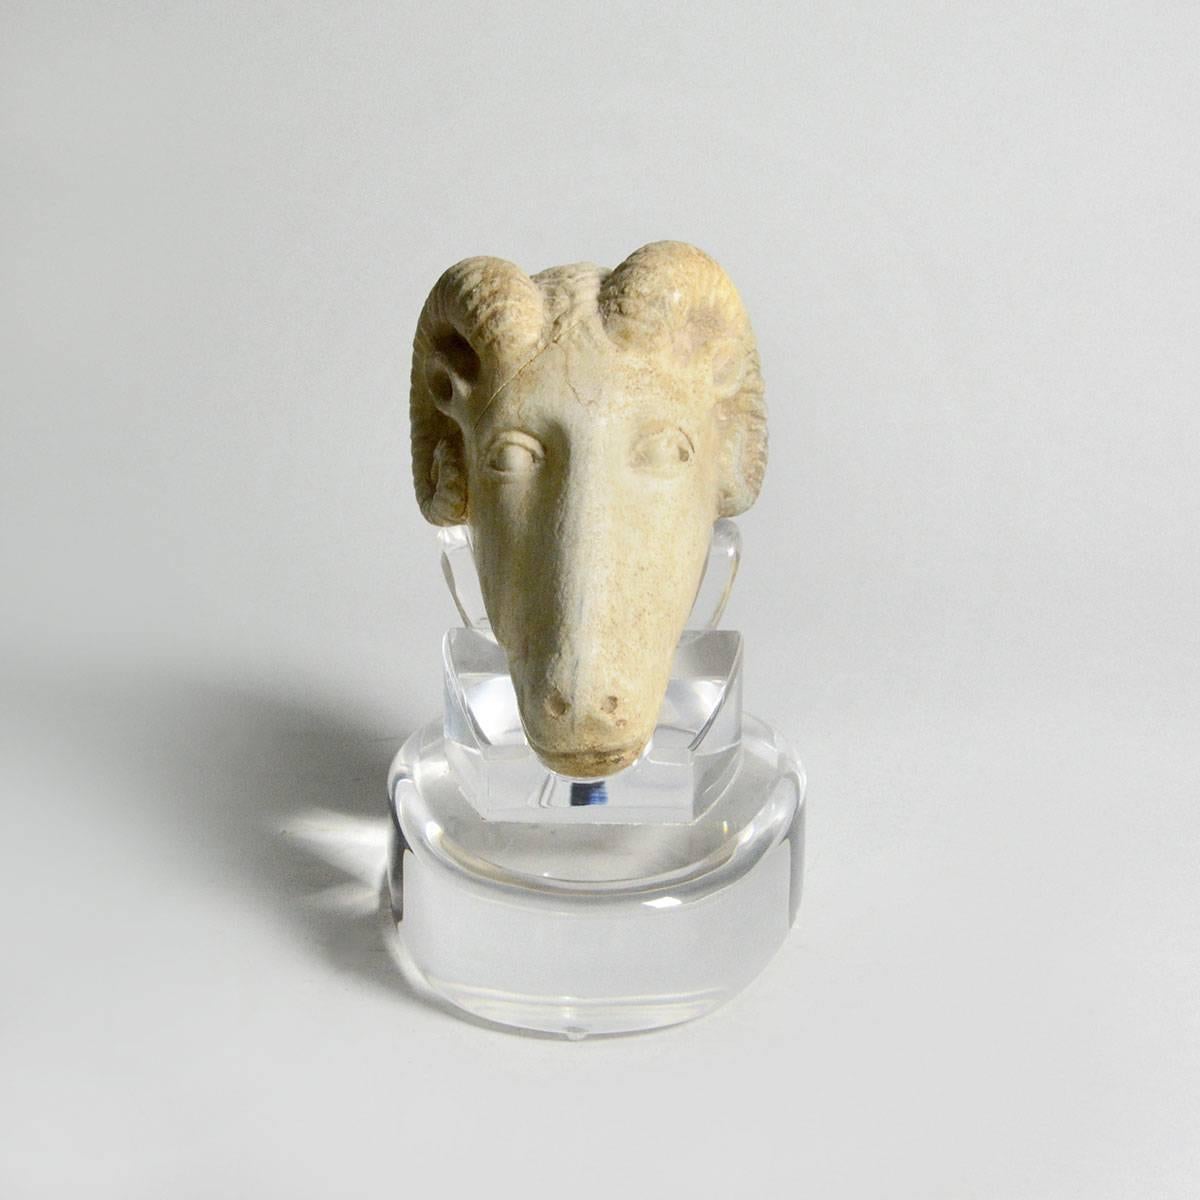 Classical Roman Roman Sculpture of a Ram's Head For Sale